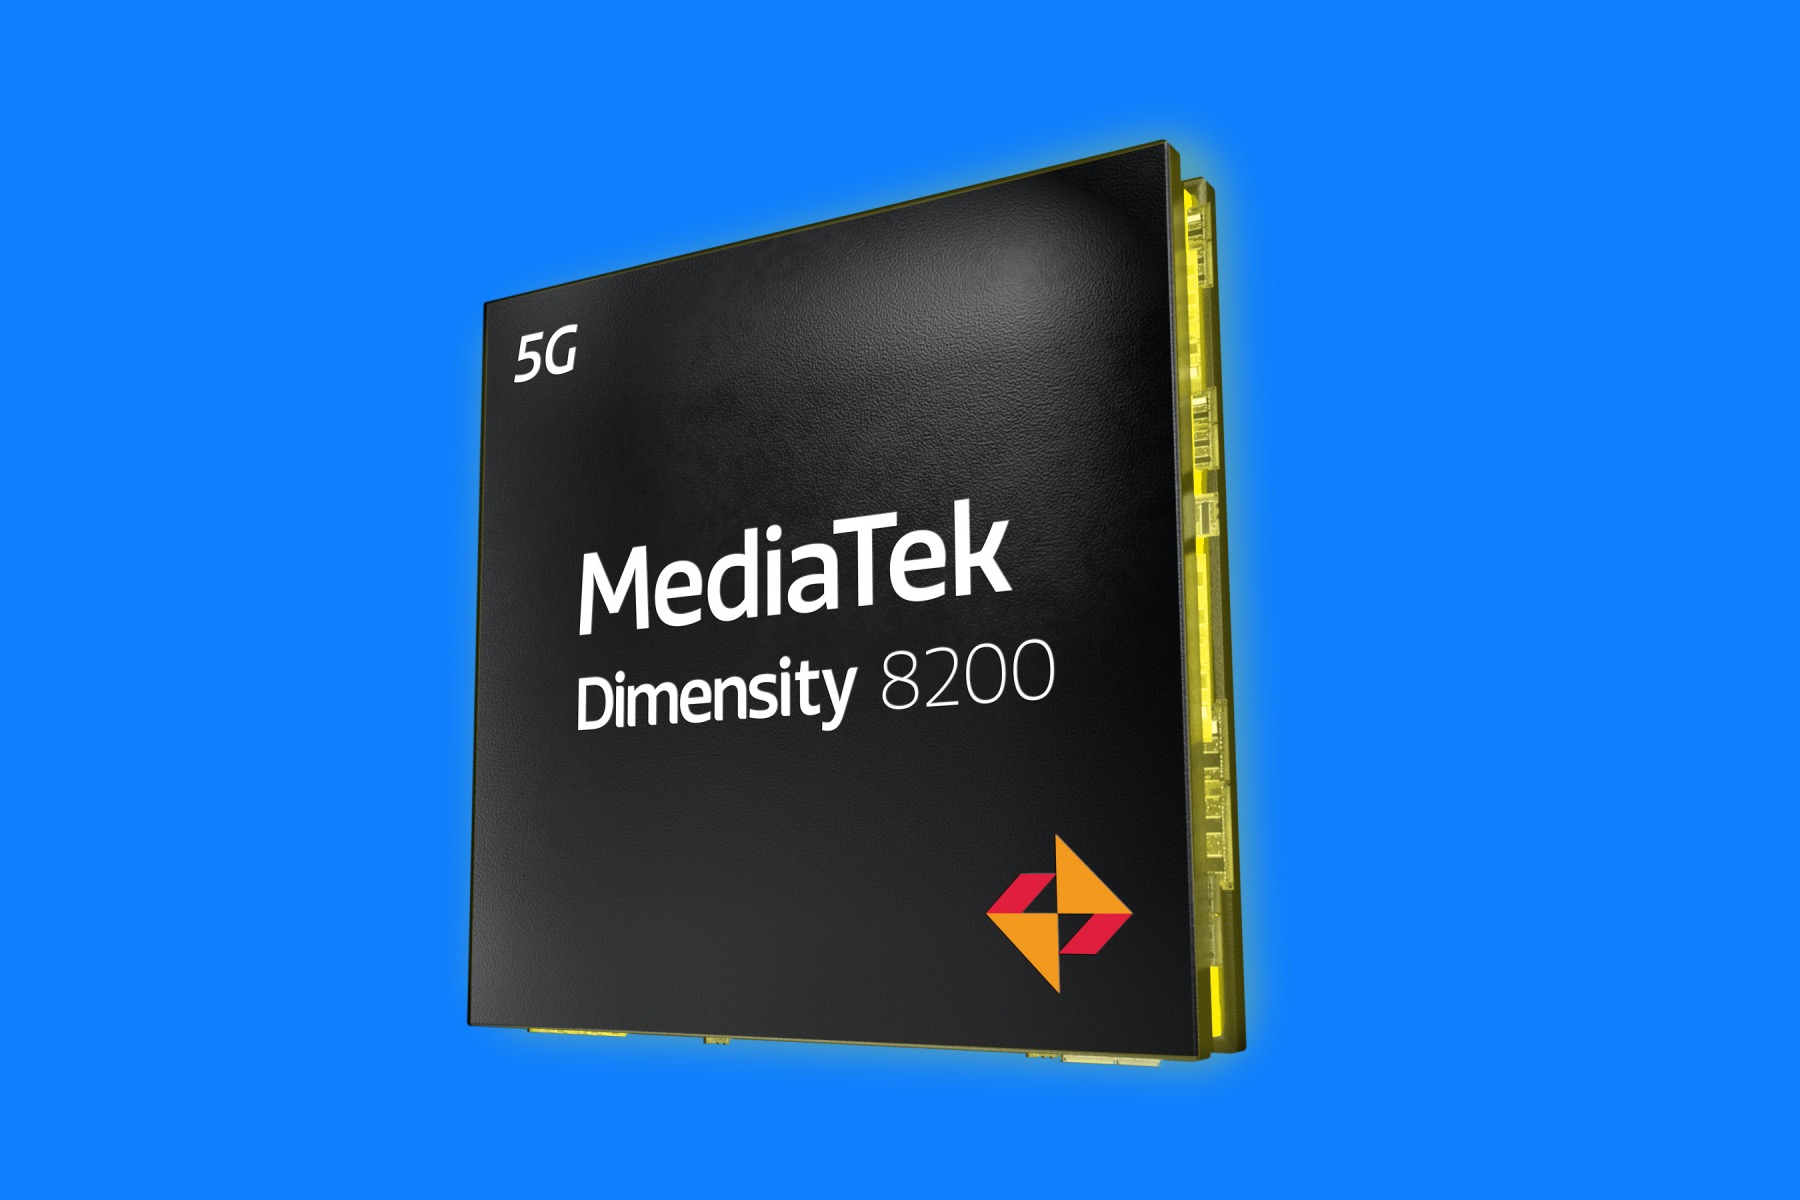 MediaTek’s new Dimensity 8200 brings flagship performance to
cheaper phones